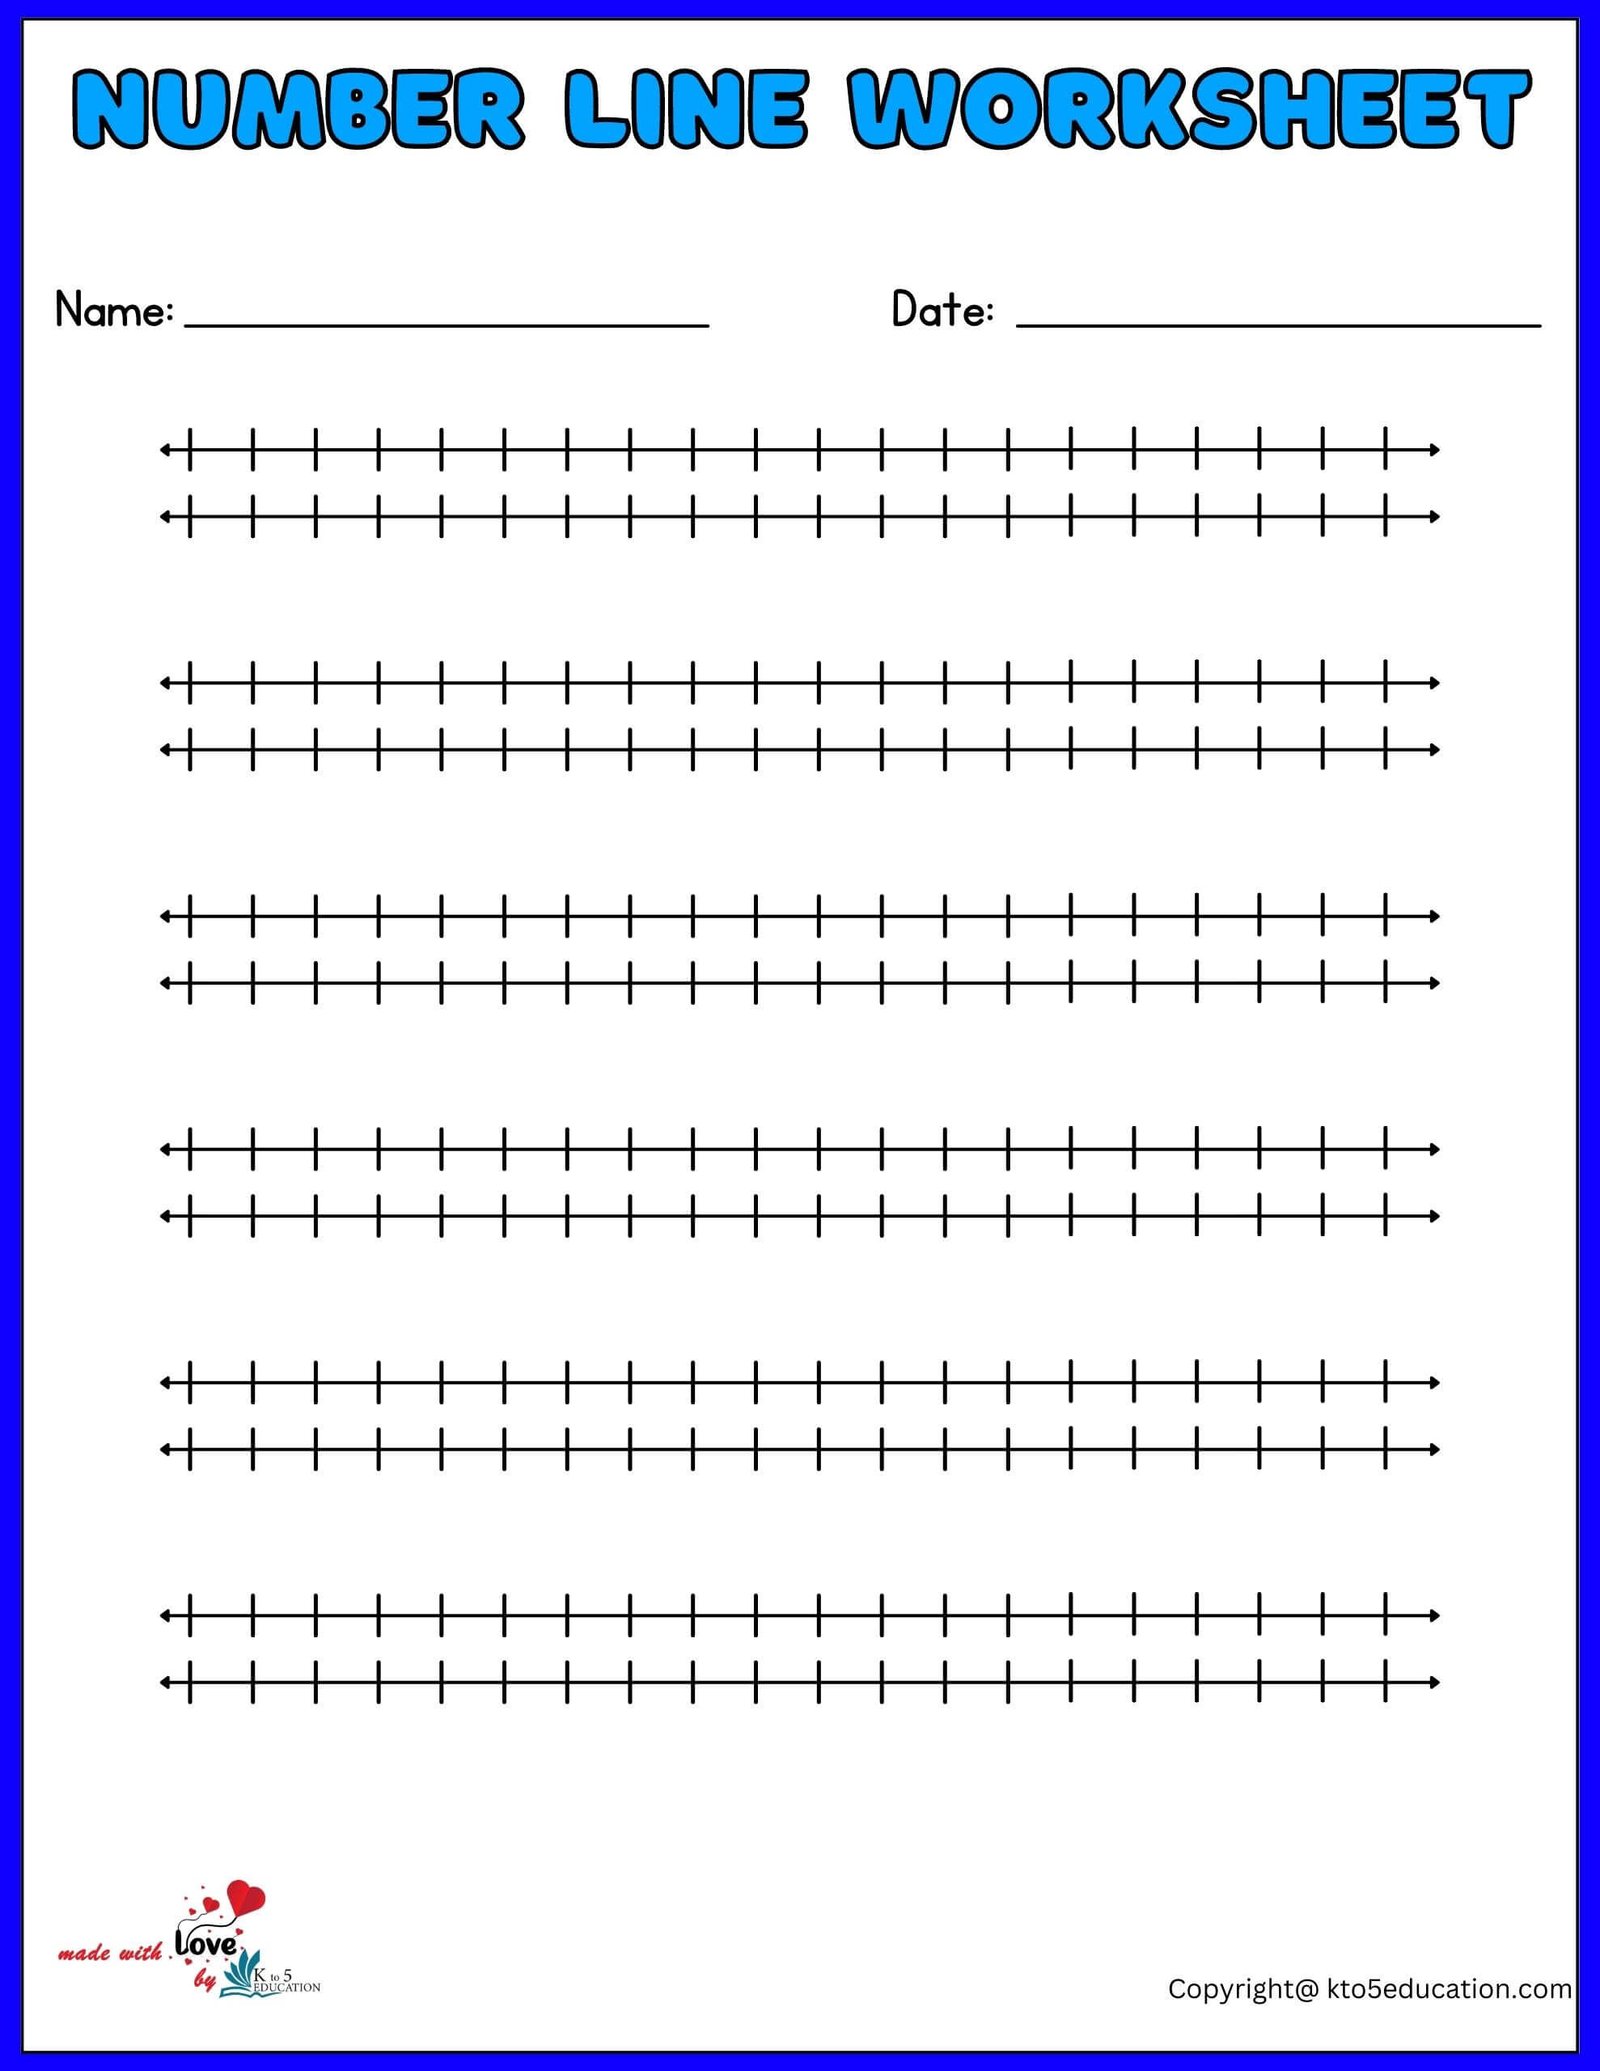 Double Number Line Worksheet For Kids 1-20